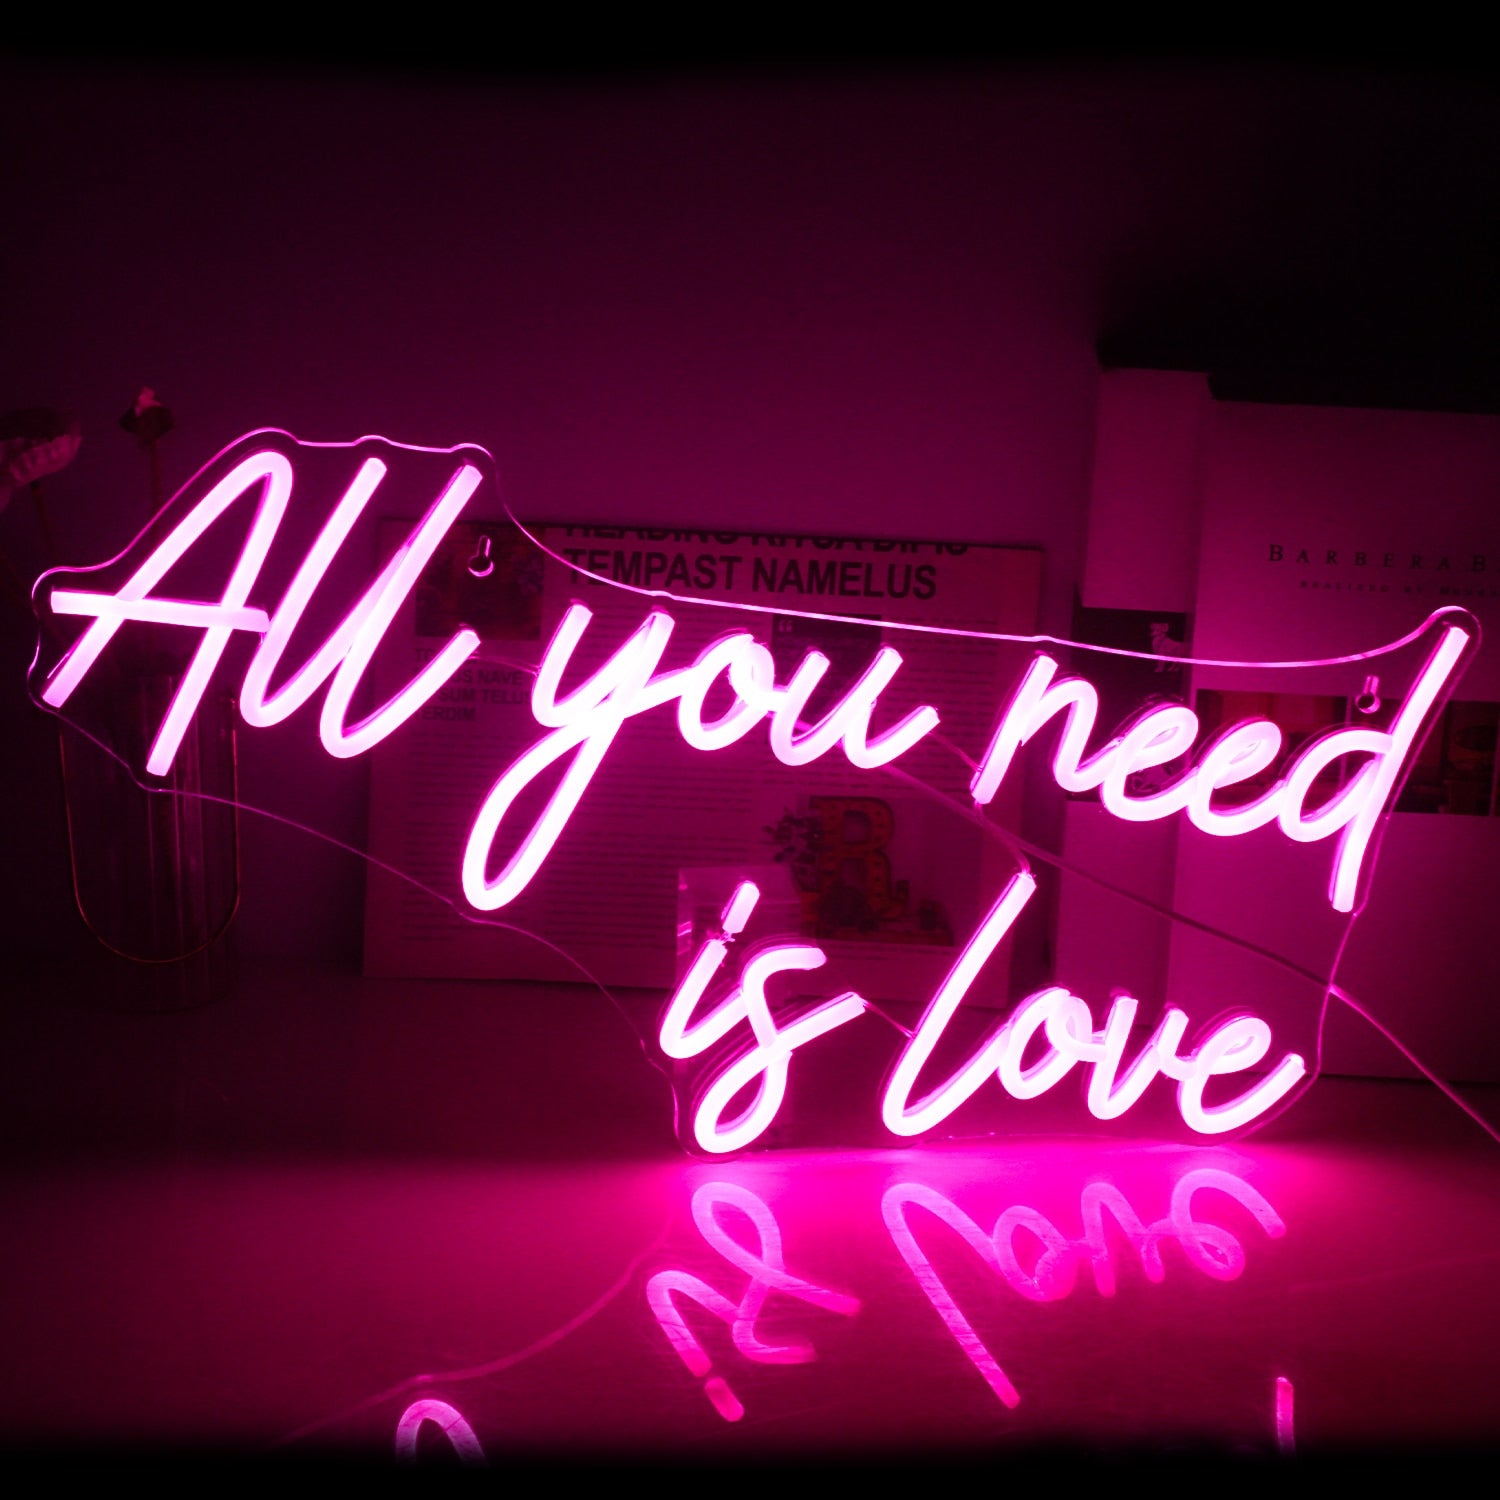 Neon All you need is love - 47cmx29cm